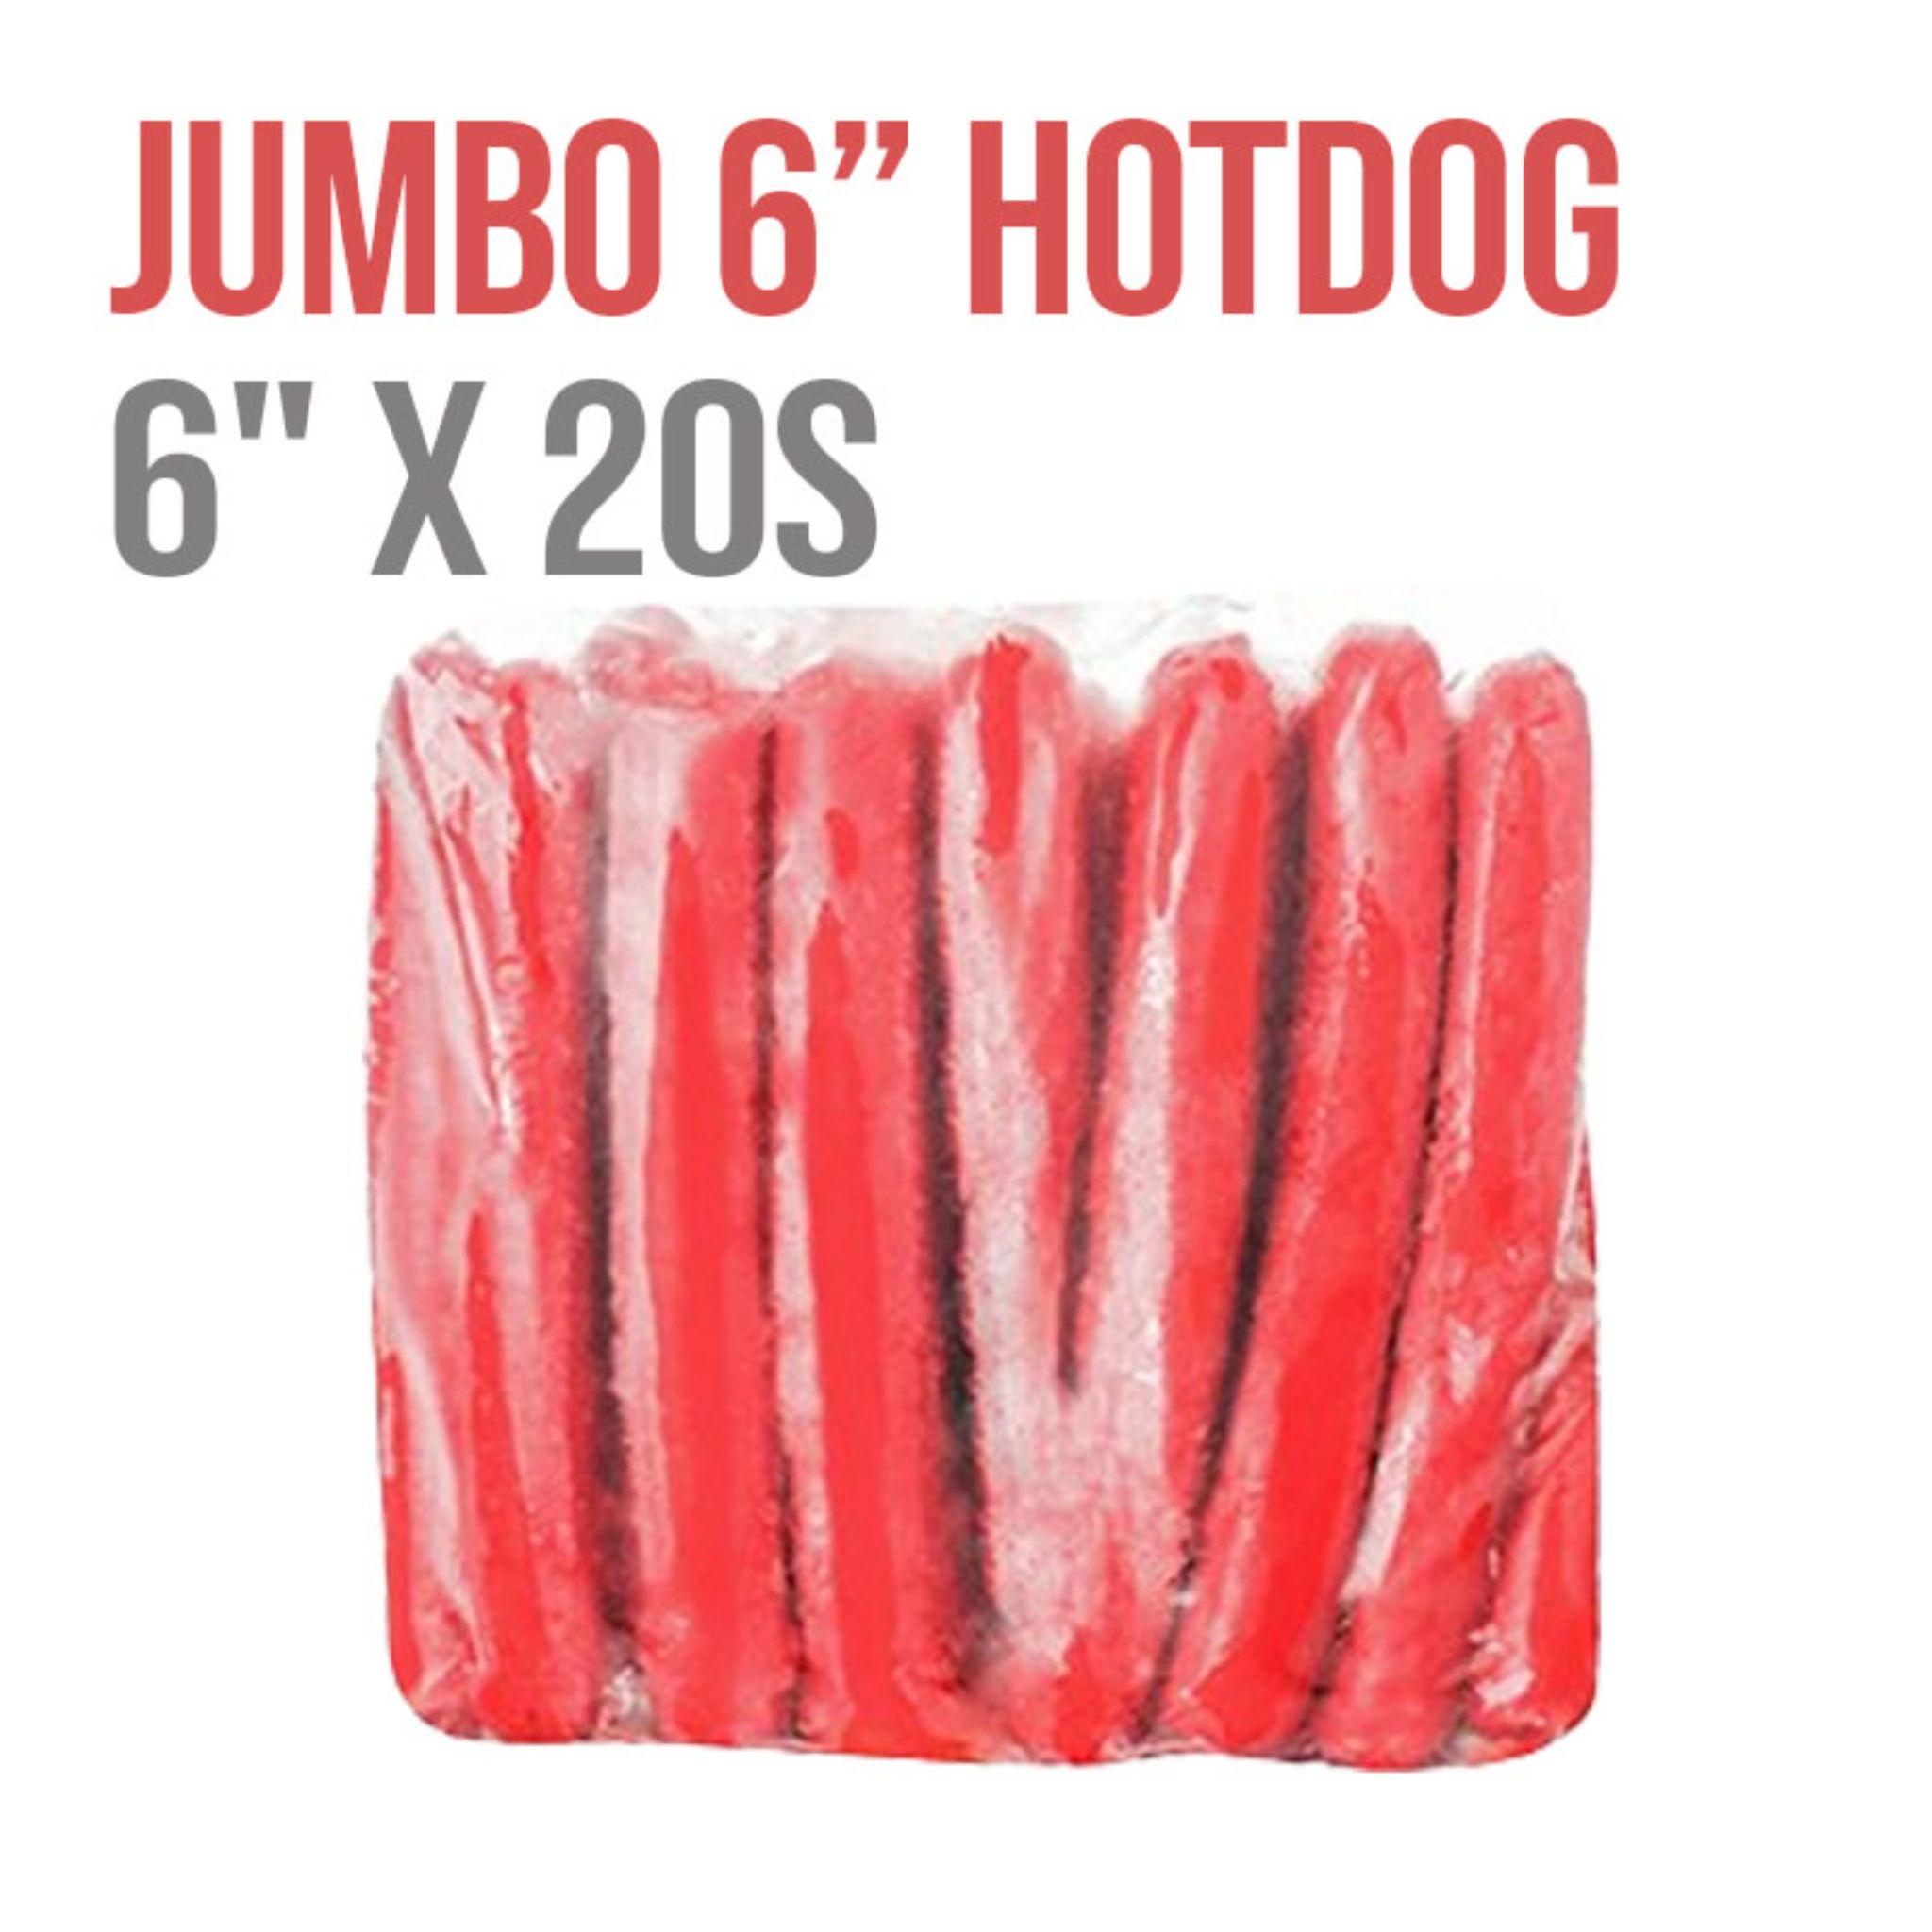 Jumbo Hotdog 6 in x 20s